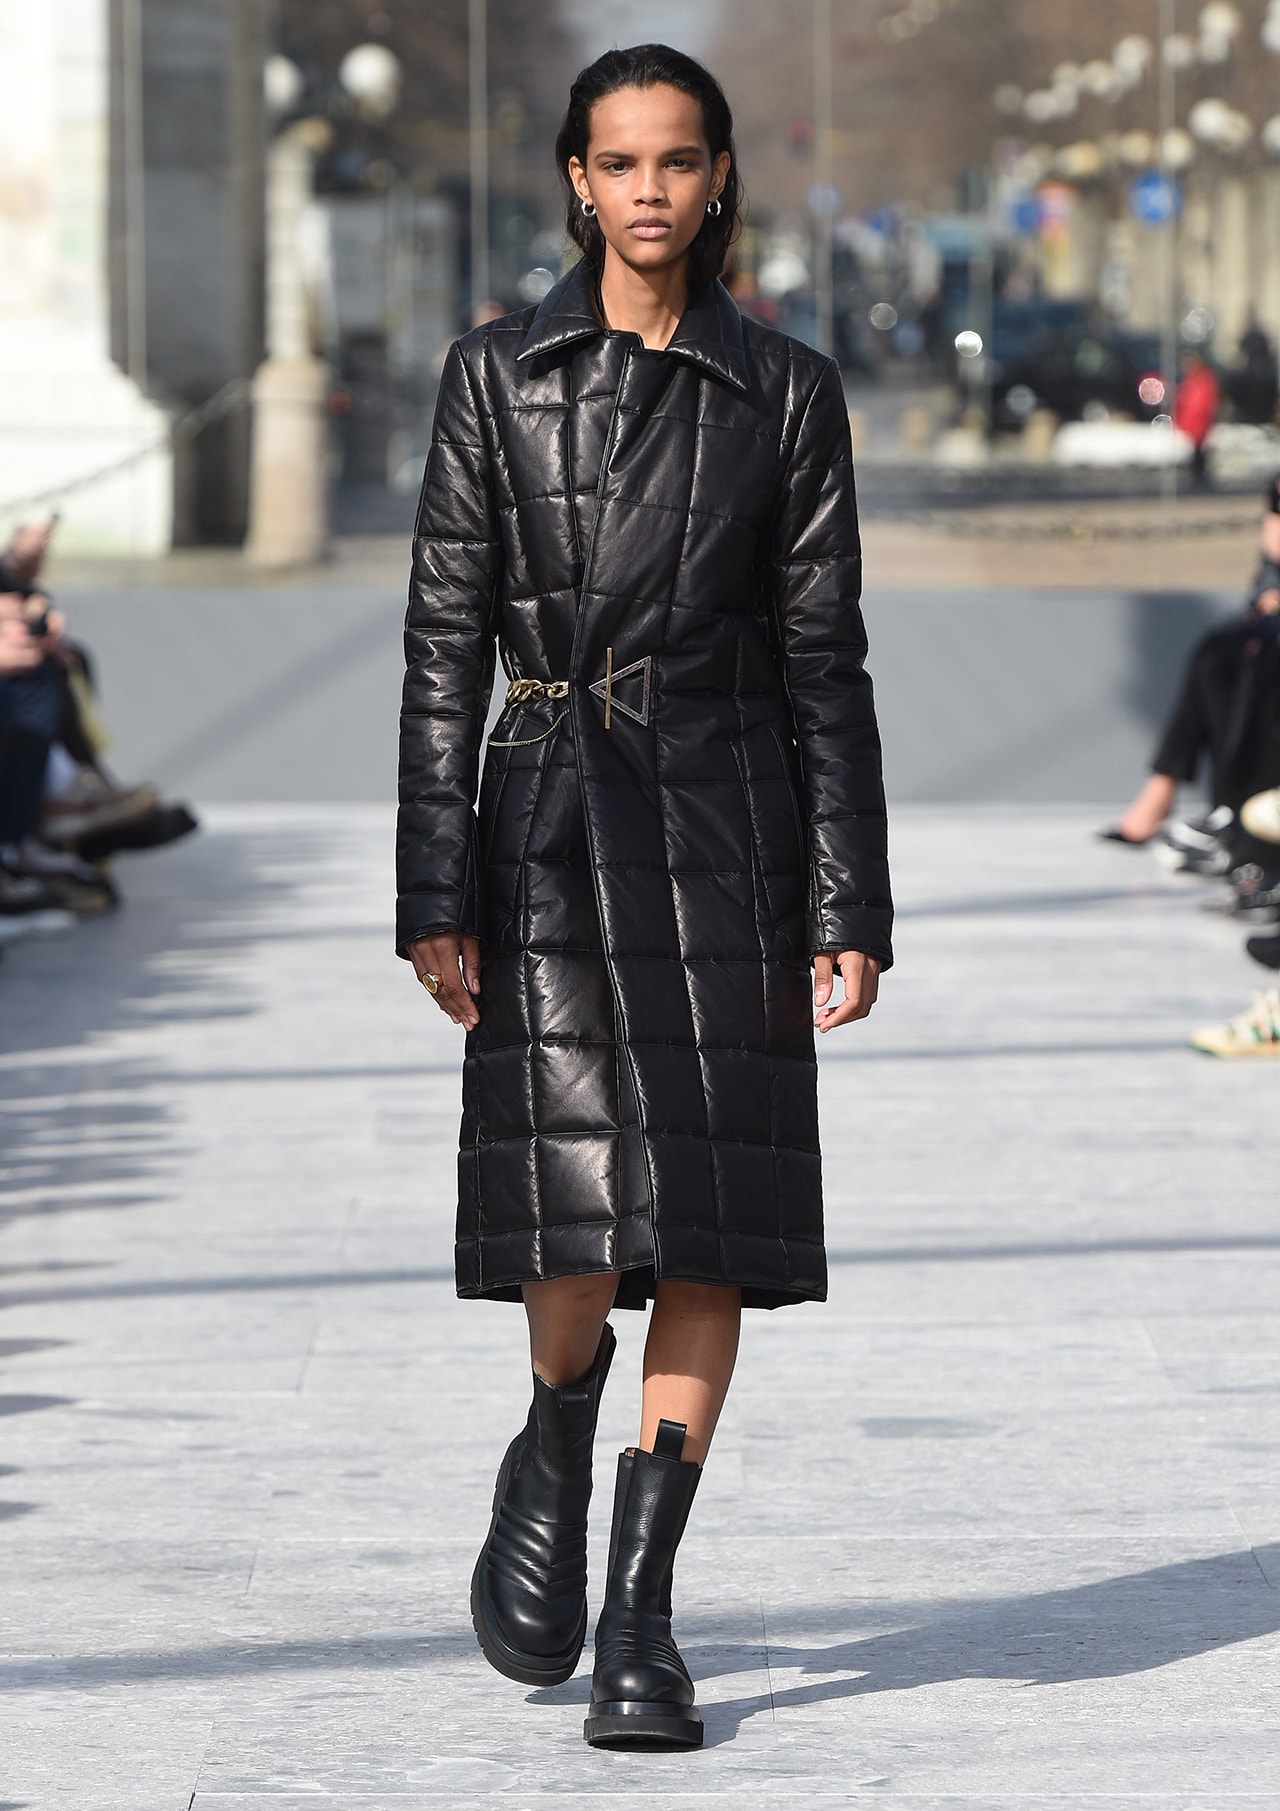 Bottega Veneta Milan Fashion Week Fall Winter 2019 FW19 Daniel Lee Debut Runway Show black leather coat boots